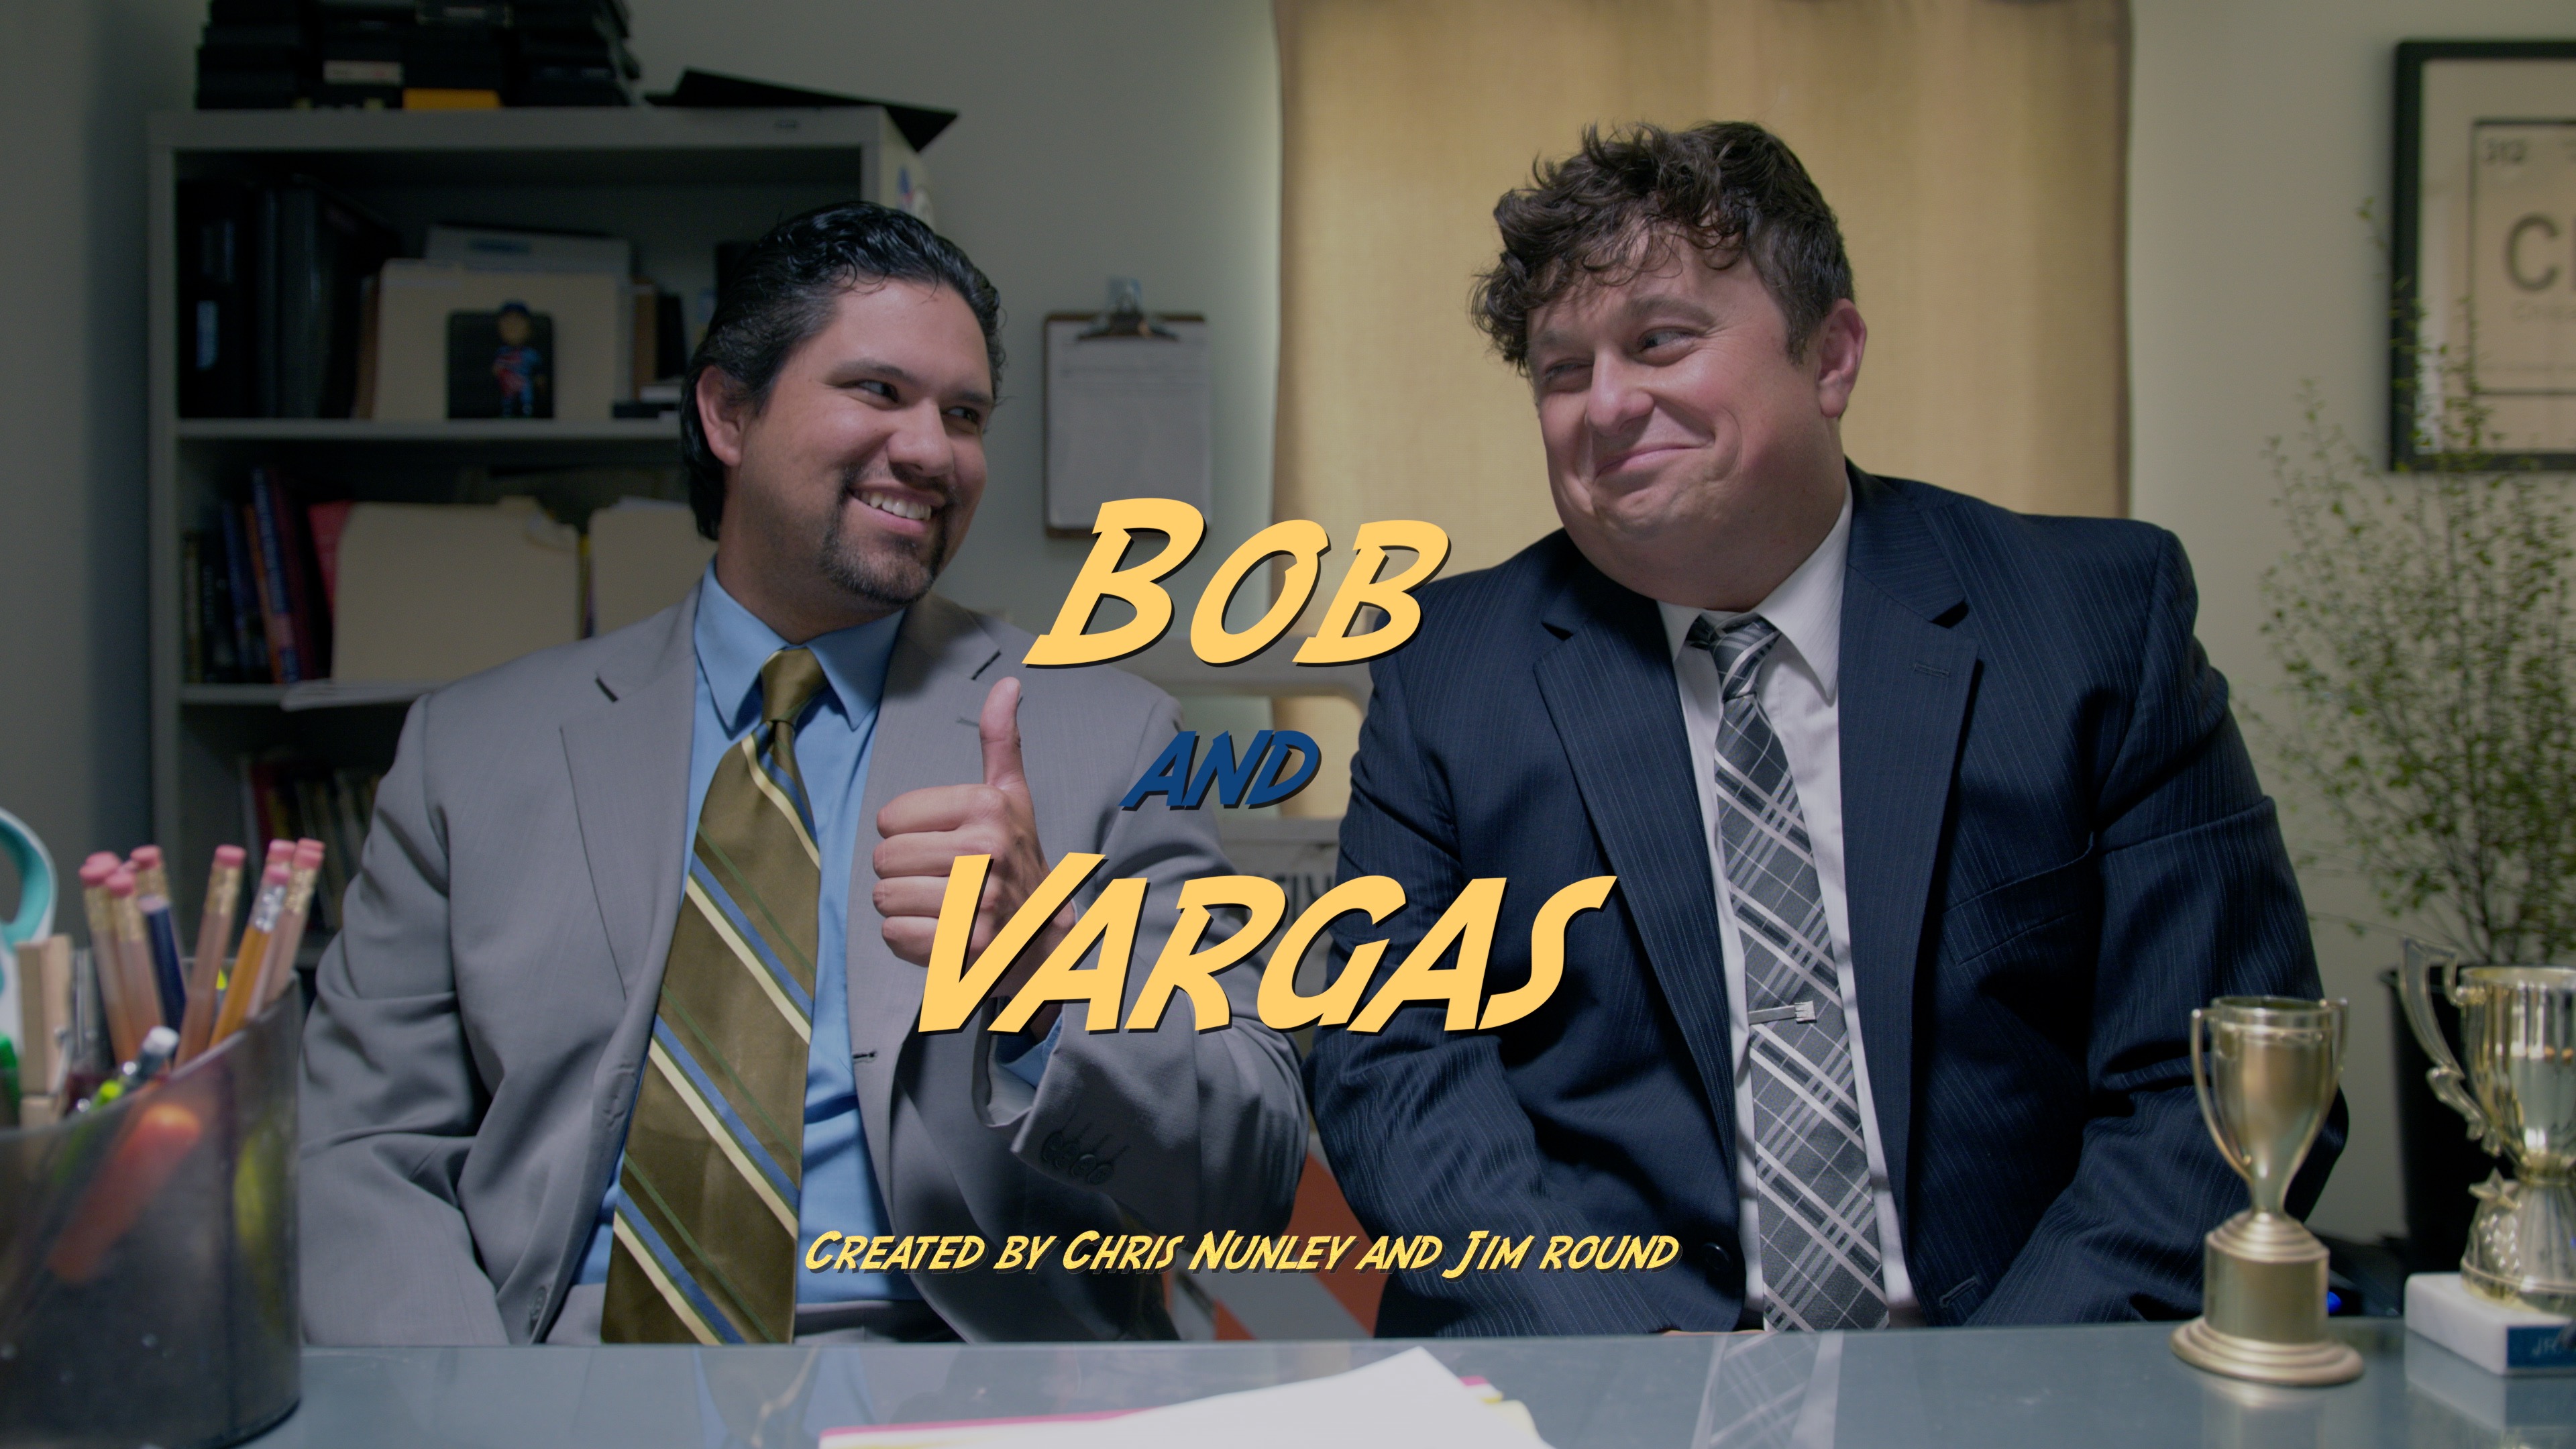 Bob and Vargas